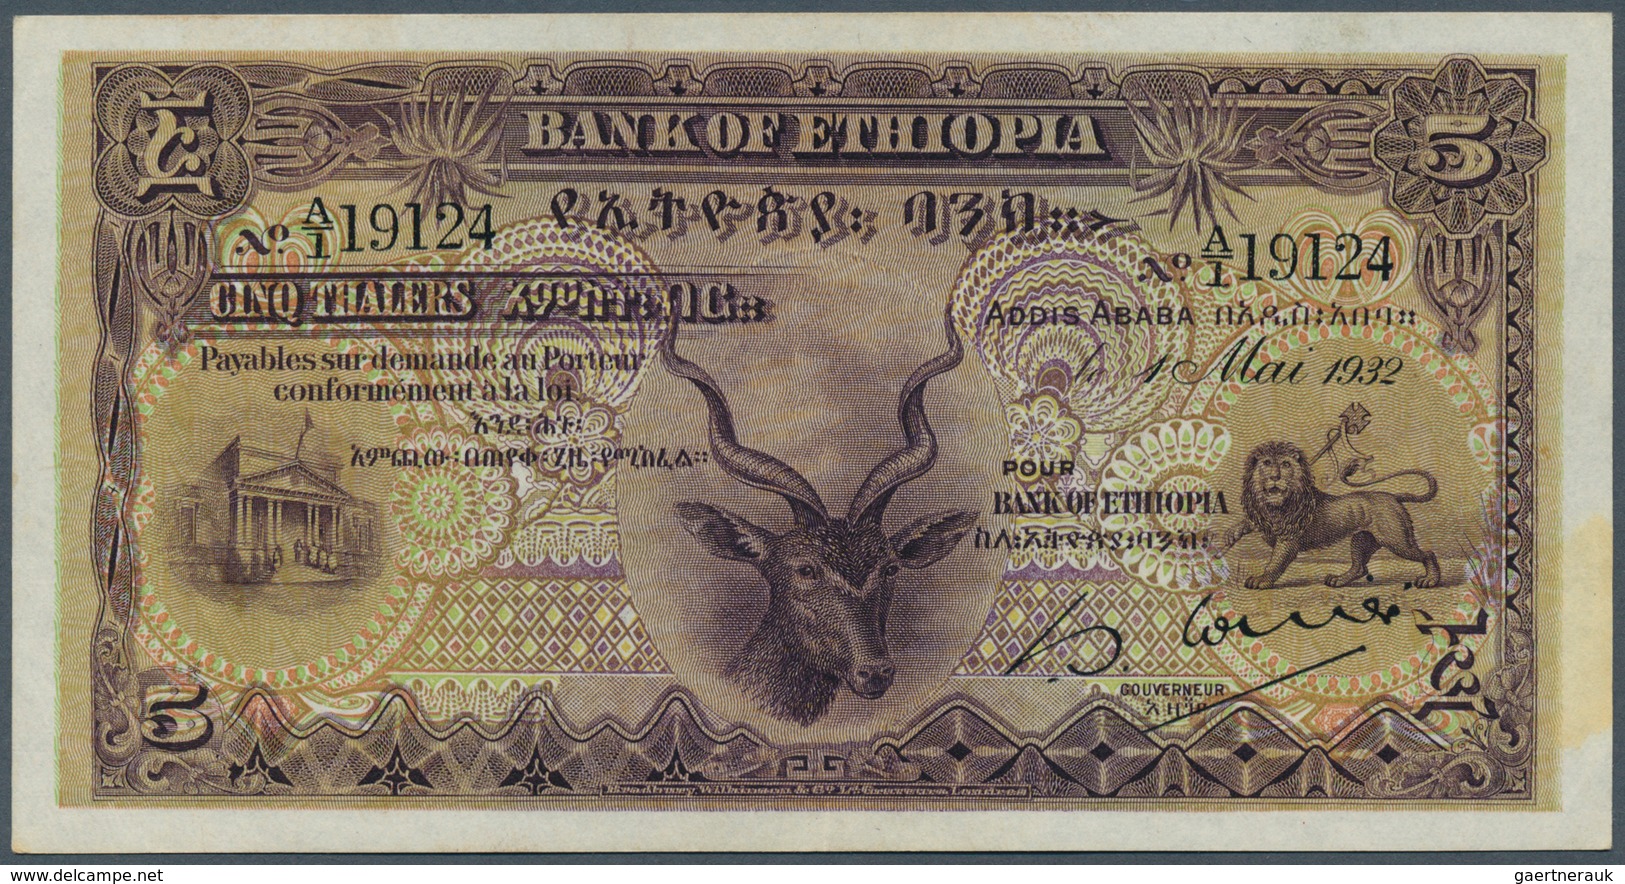 Ethiopia / Äthiopien: 5 Thalers 1932, P.7, Very Nice Looking Note With A Very Soft Vertical Bend, So - Etiopía